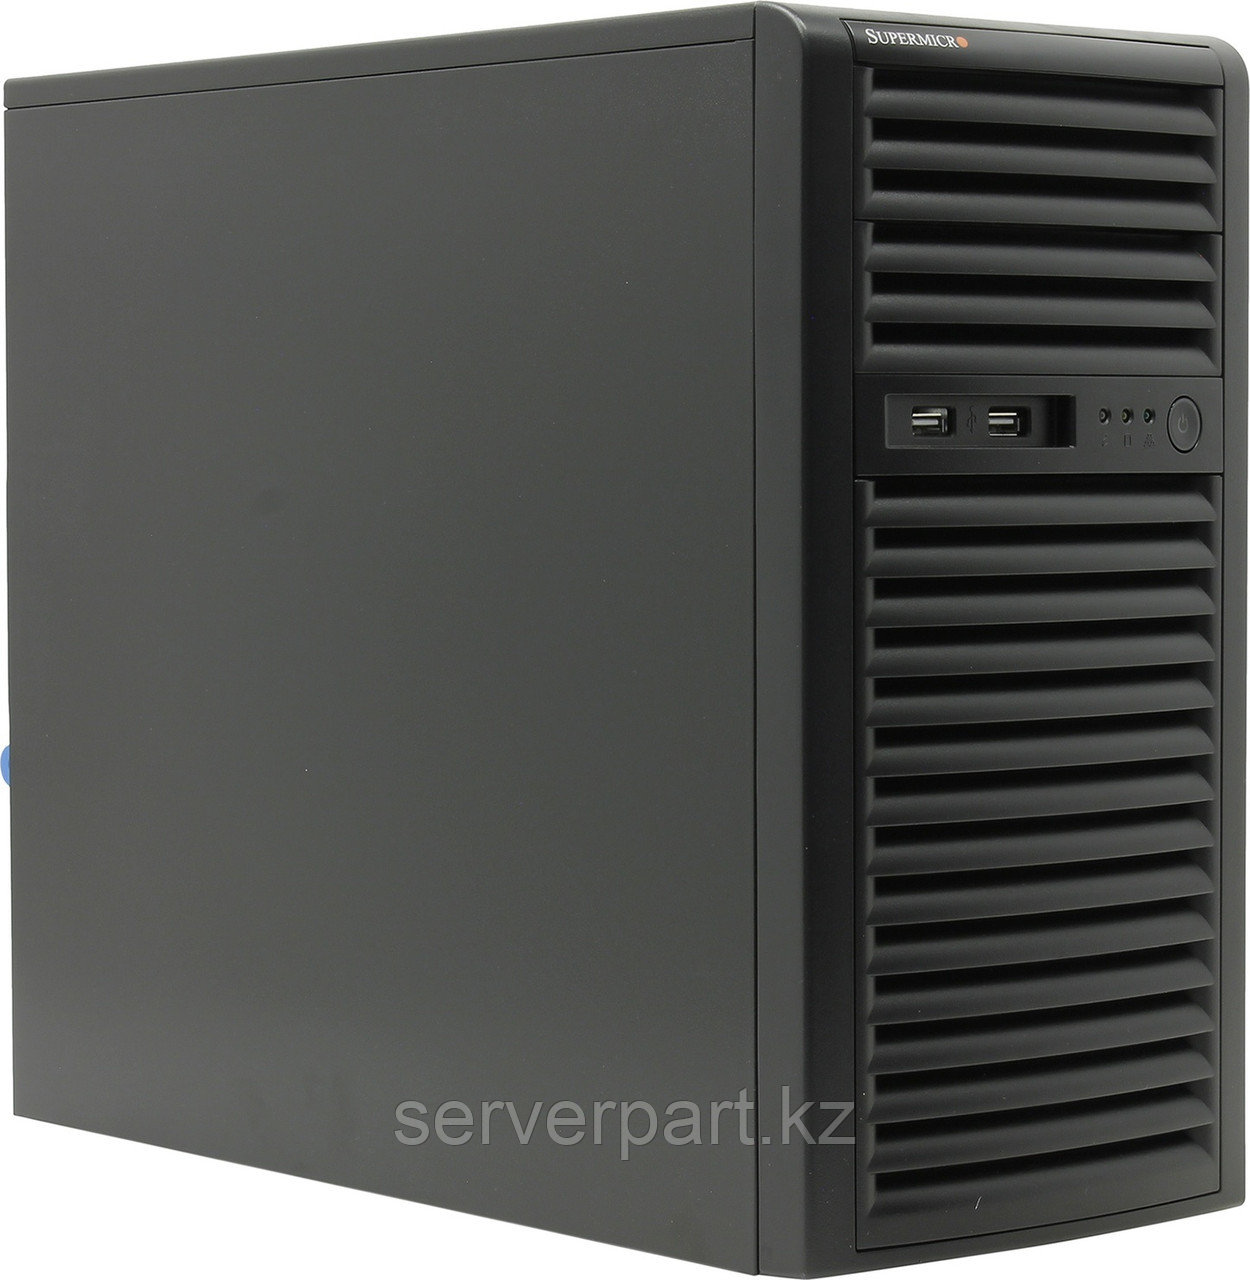 Сервер Supermicro SYS-5039D Tower 4LFF/4-core intel Xeon E3-1220v6 3GHz/48GB EUDIMM/2x240GB SSD RI Hyb, фото 1